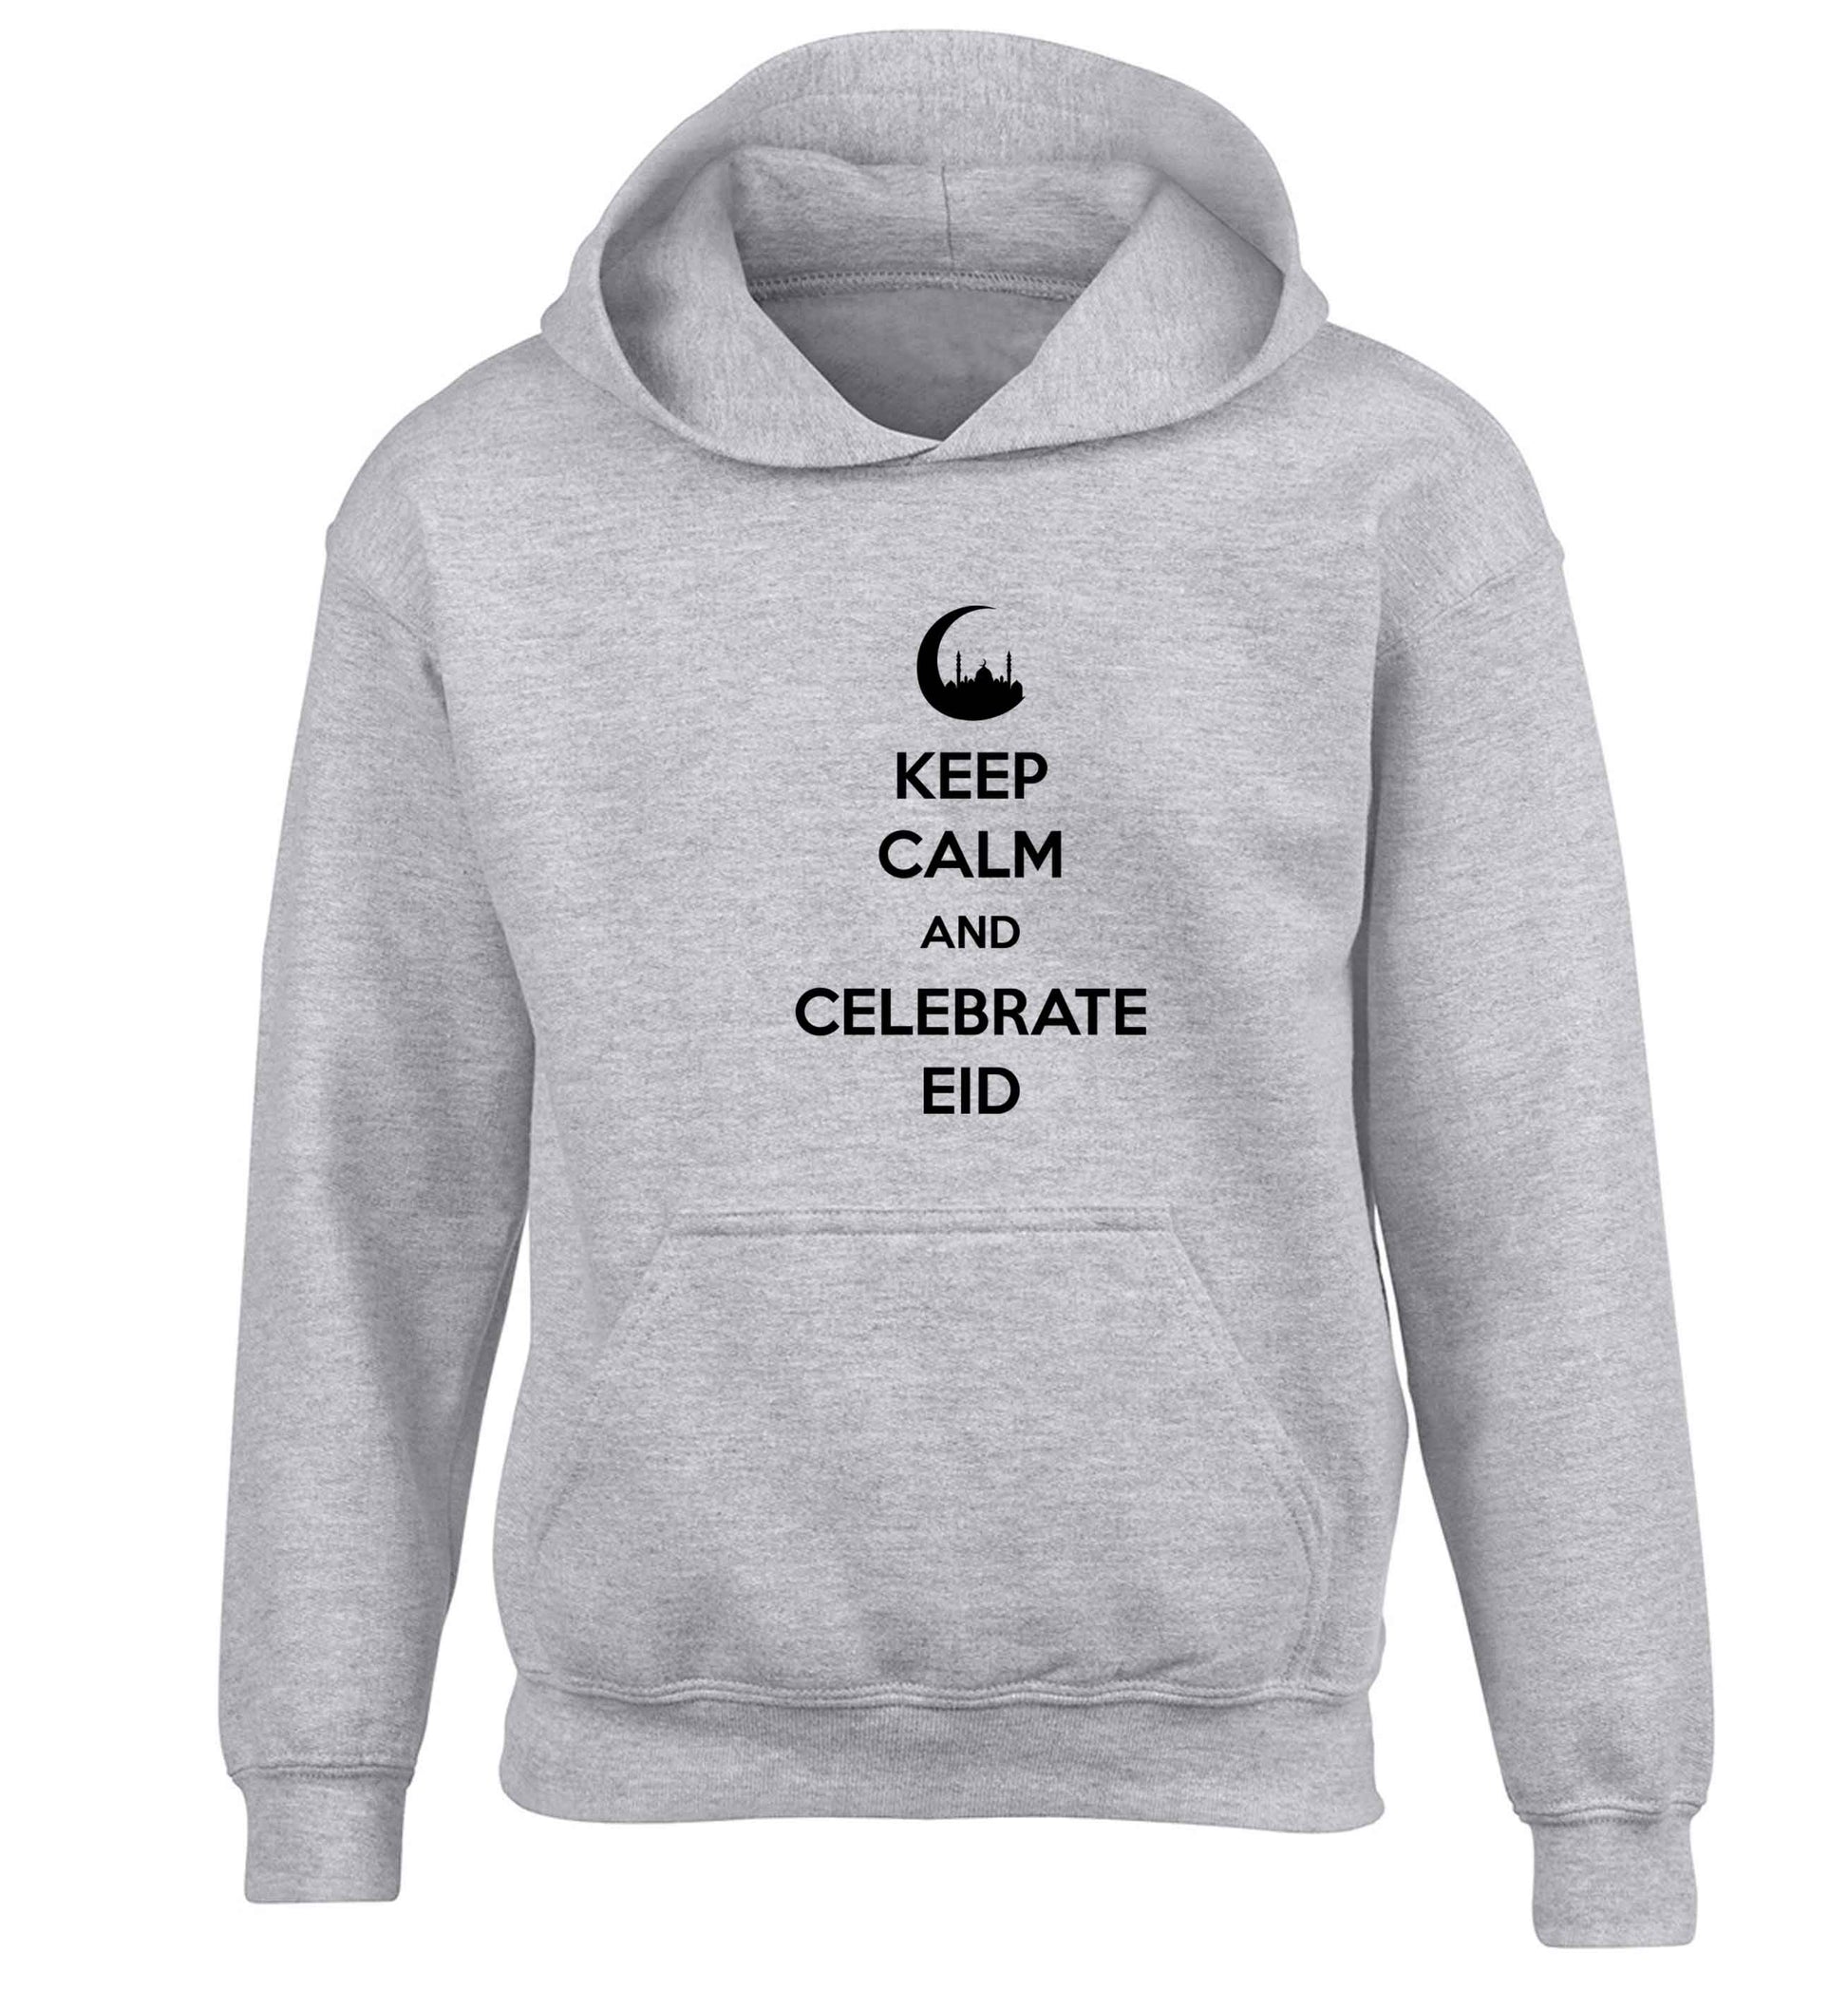 Keep calm and celebrate Eid children's grey hoodie 12-13 Years